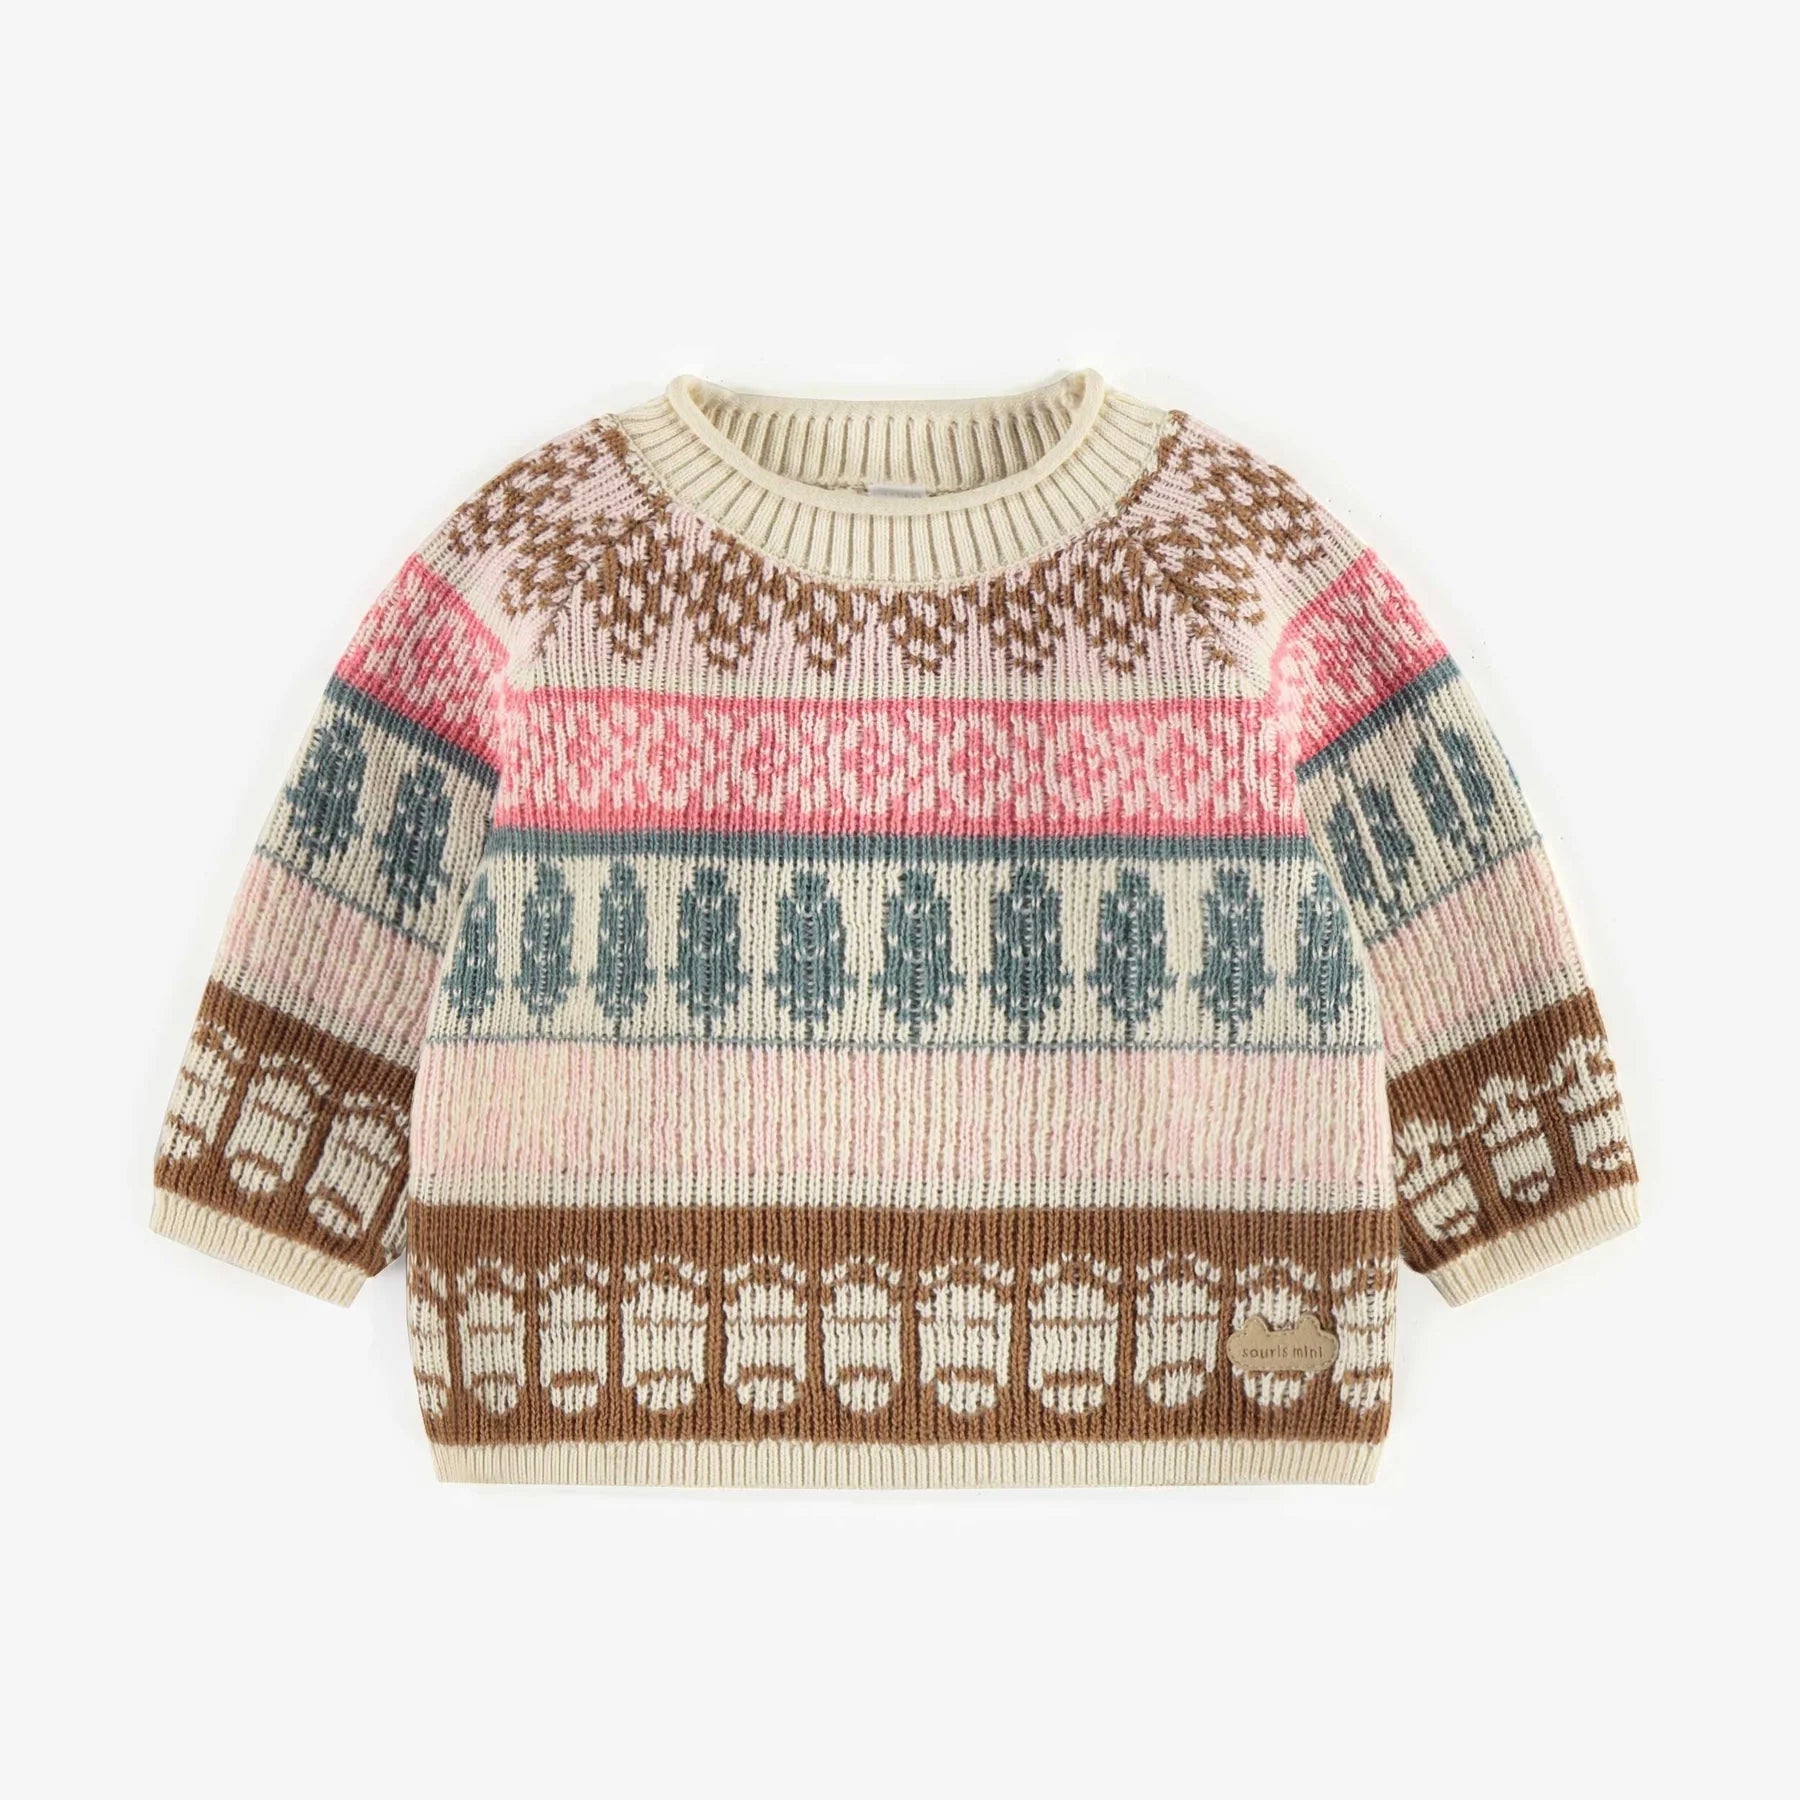 Pink & Brown Knitted Sweater - Wren Harper